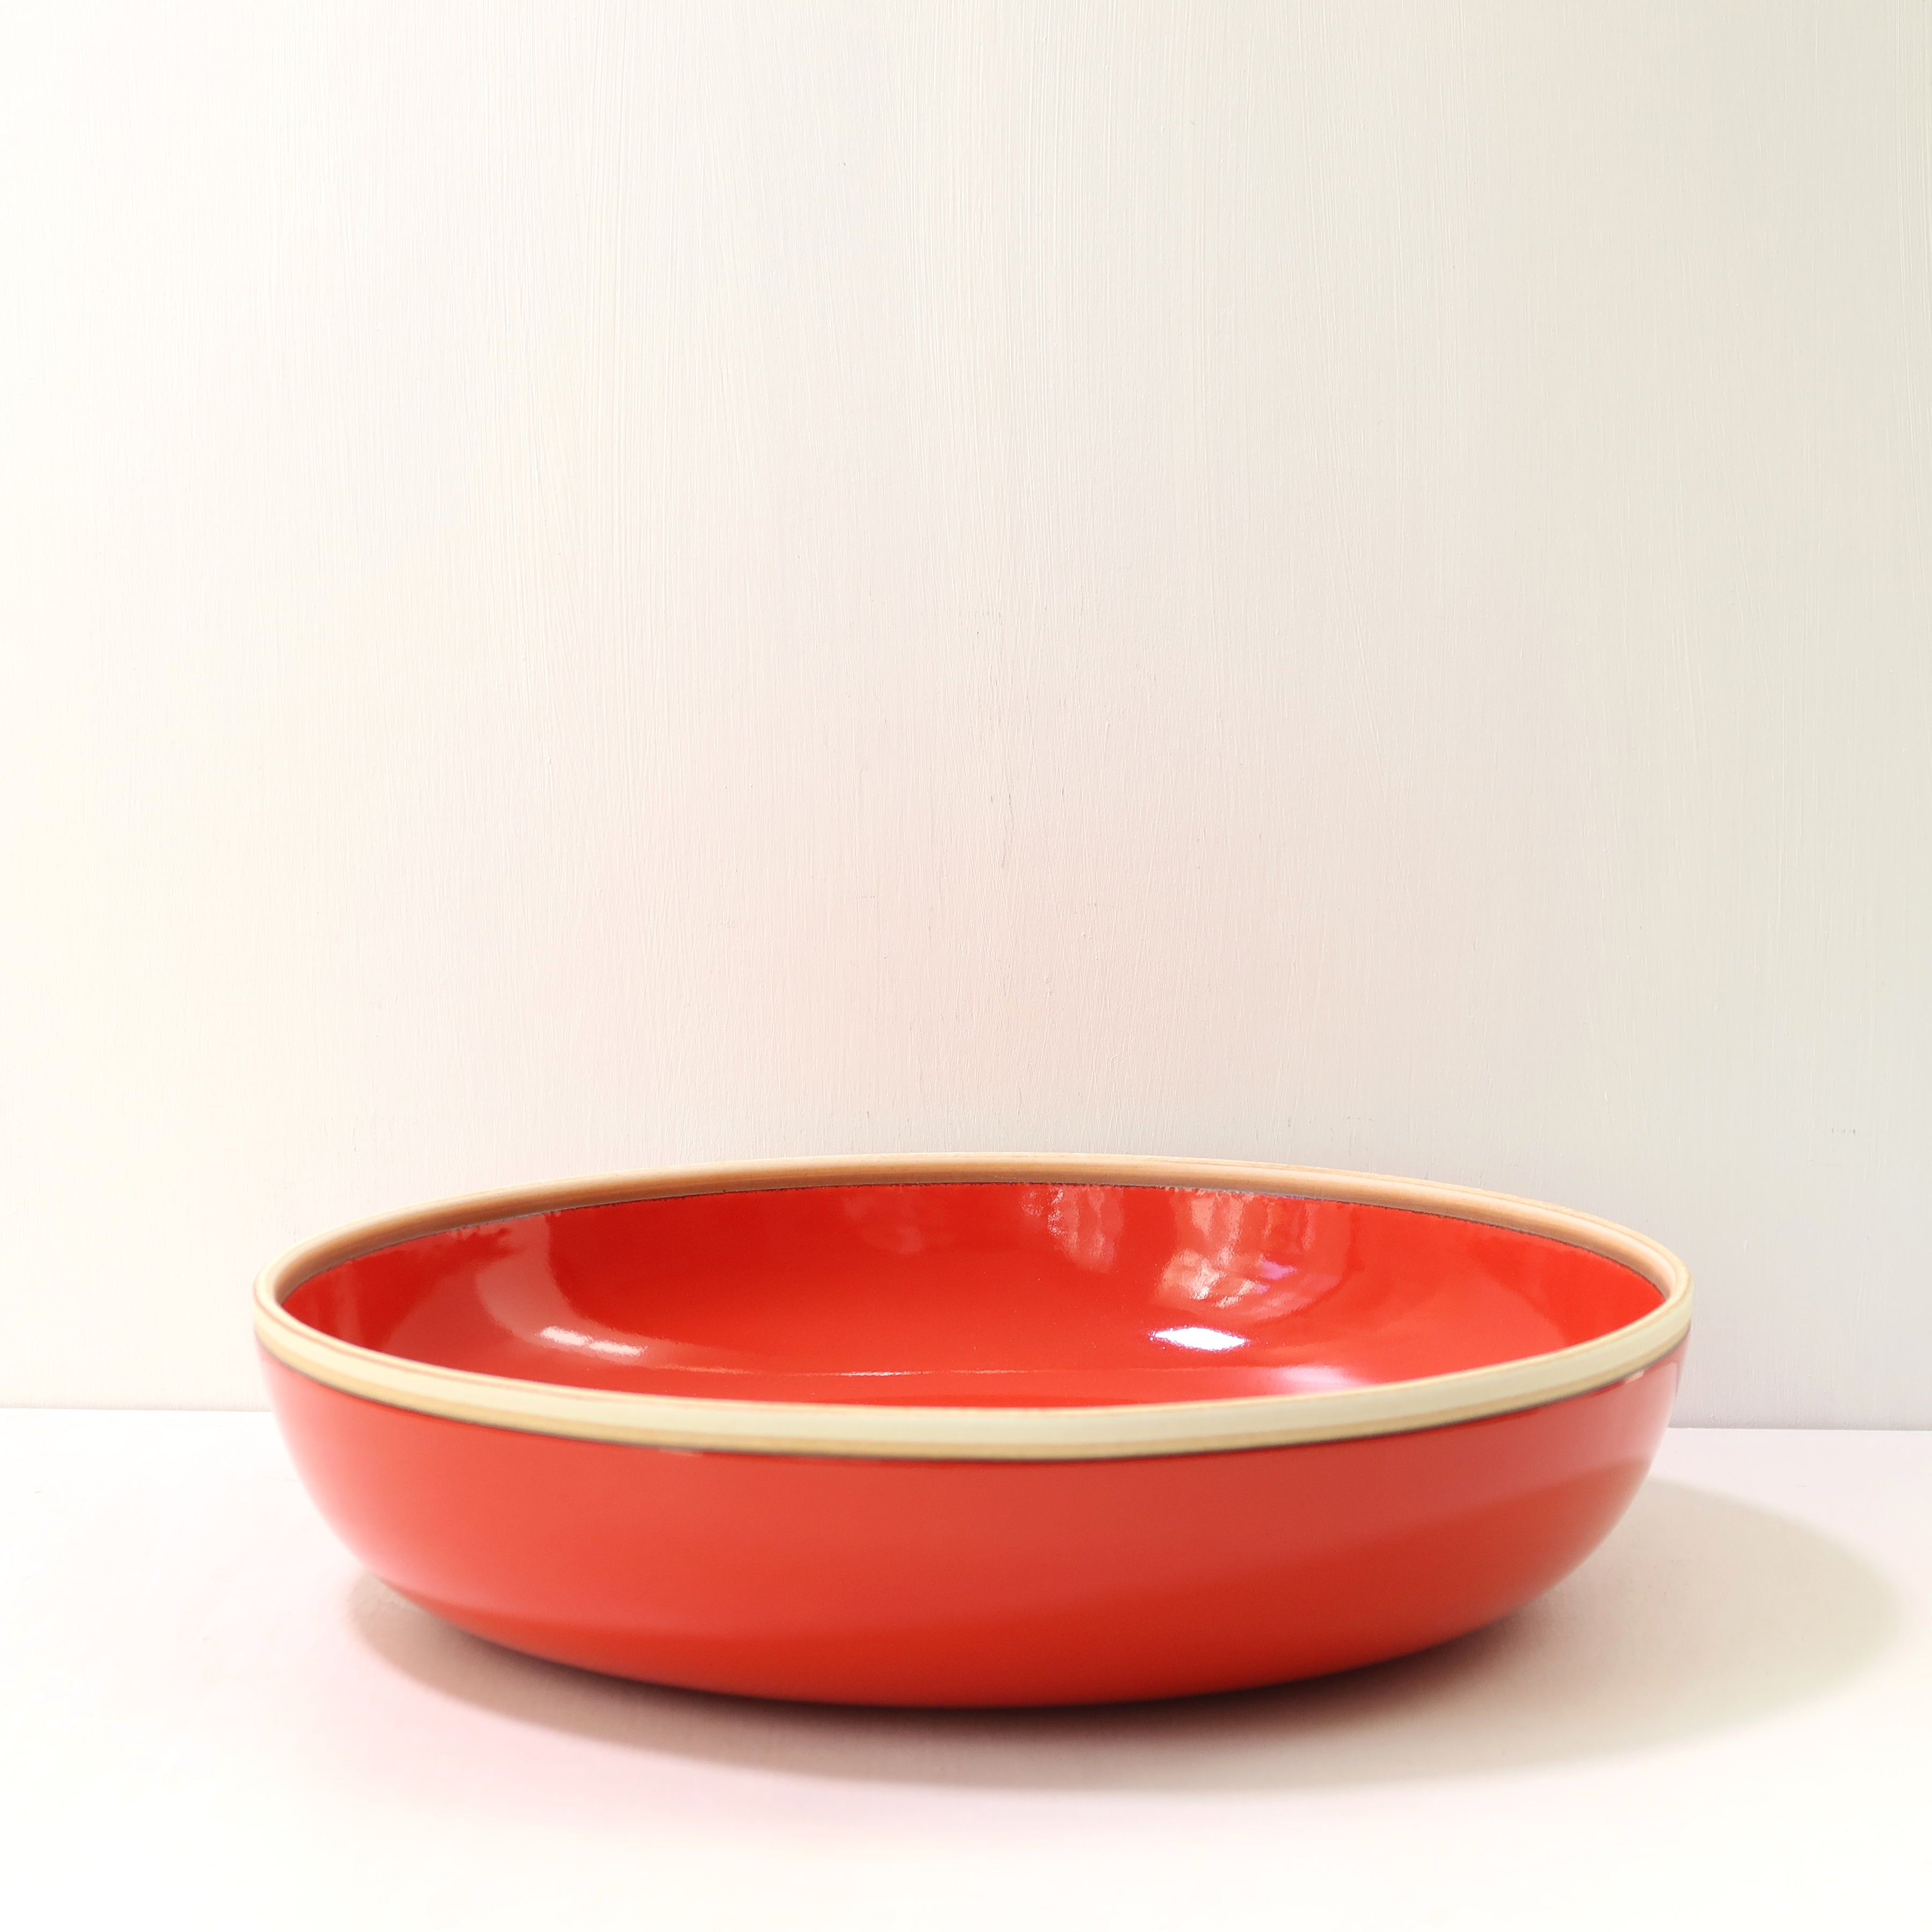 Porcelain Nesting Bowls, Lipstick Red